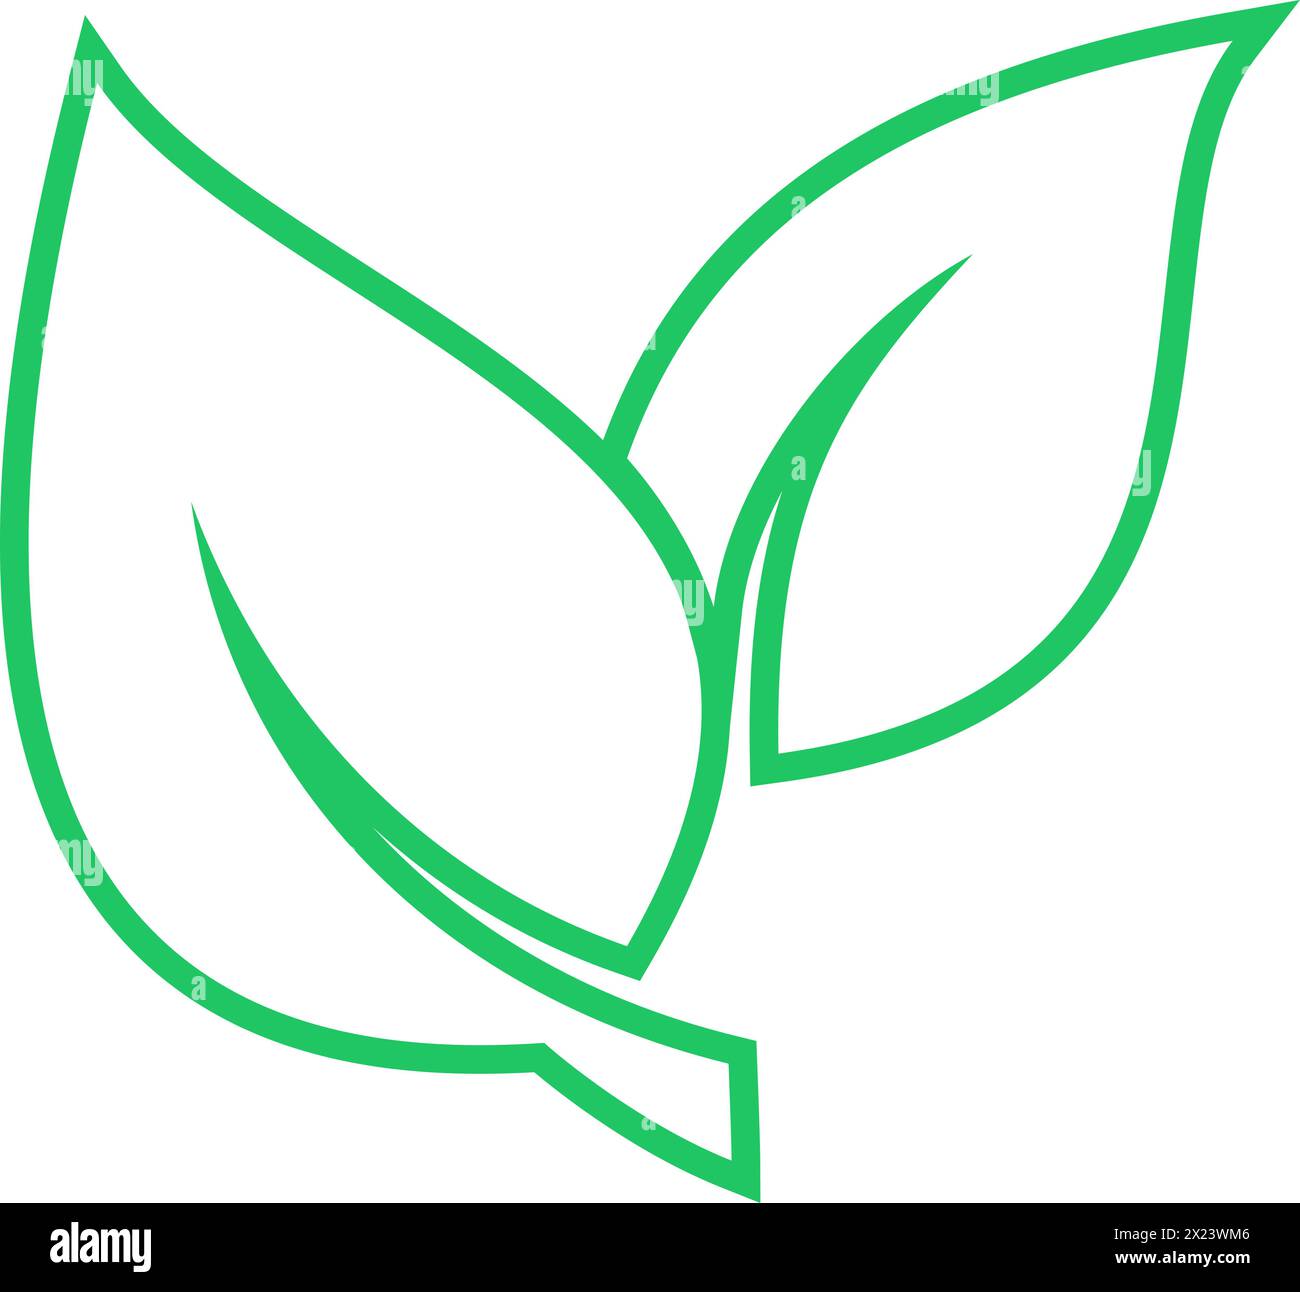 Lineares grünes Leaves Symbol als Symbol für Umweltschutzstrategie Stock Vektor